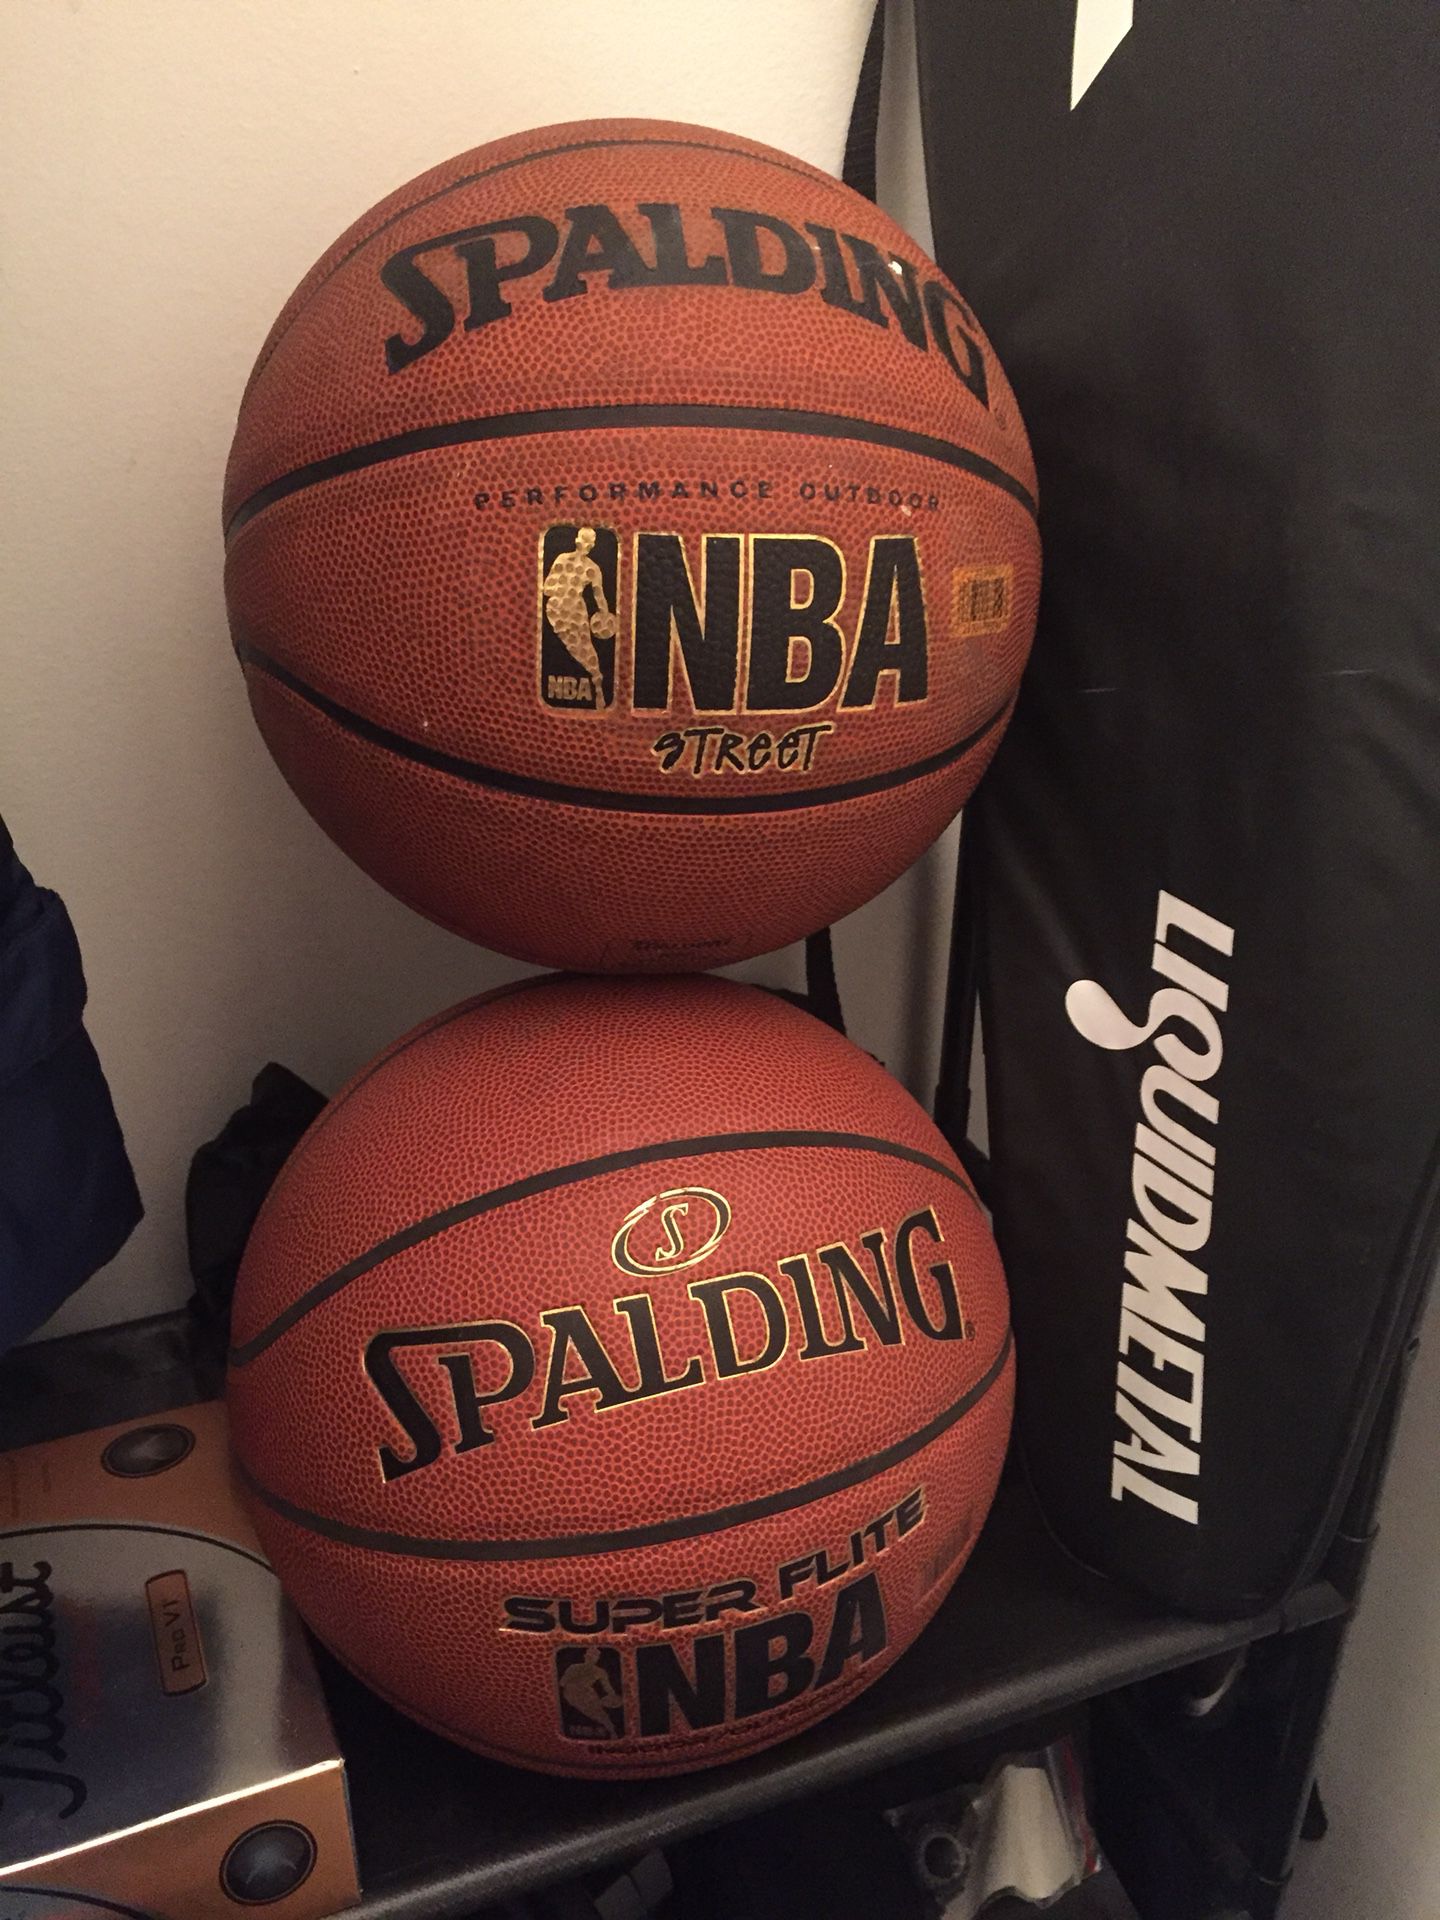 1 Spalding basketball